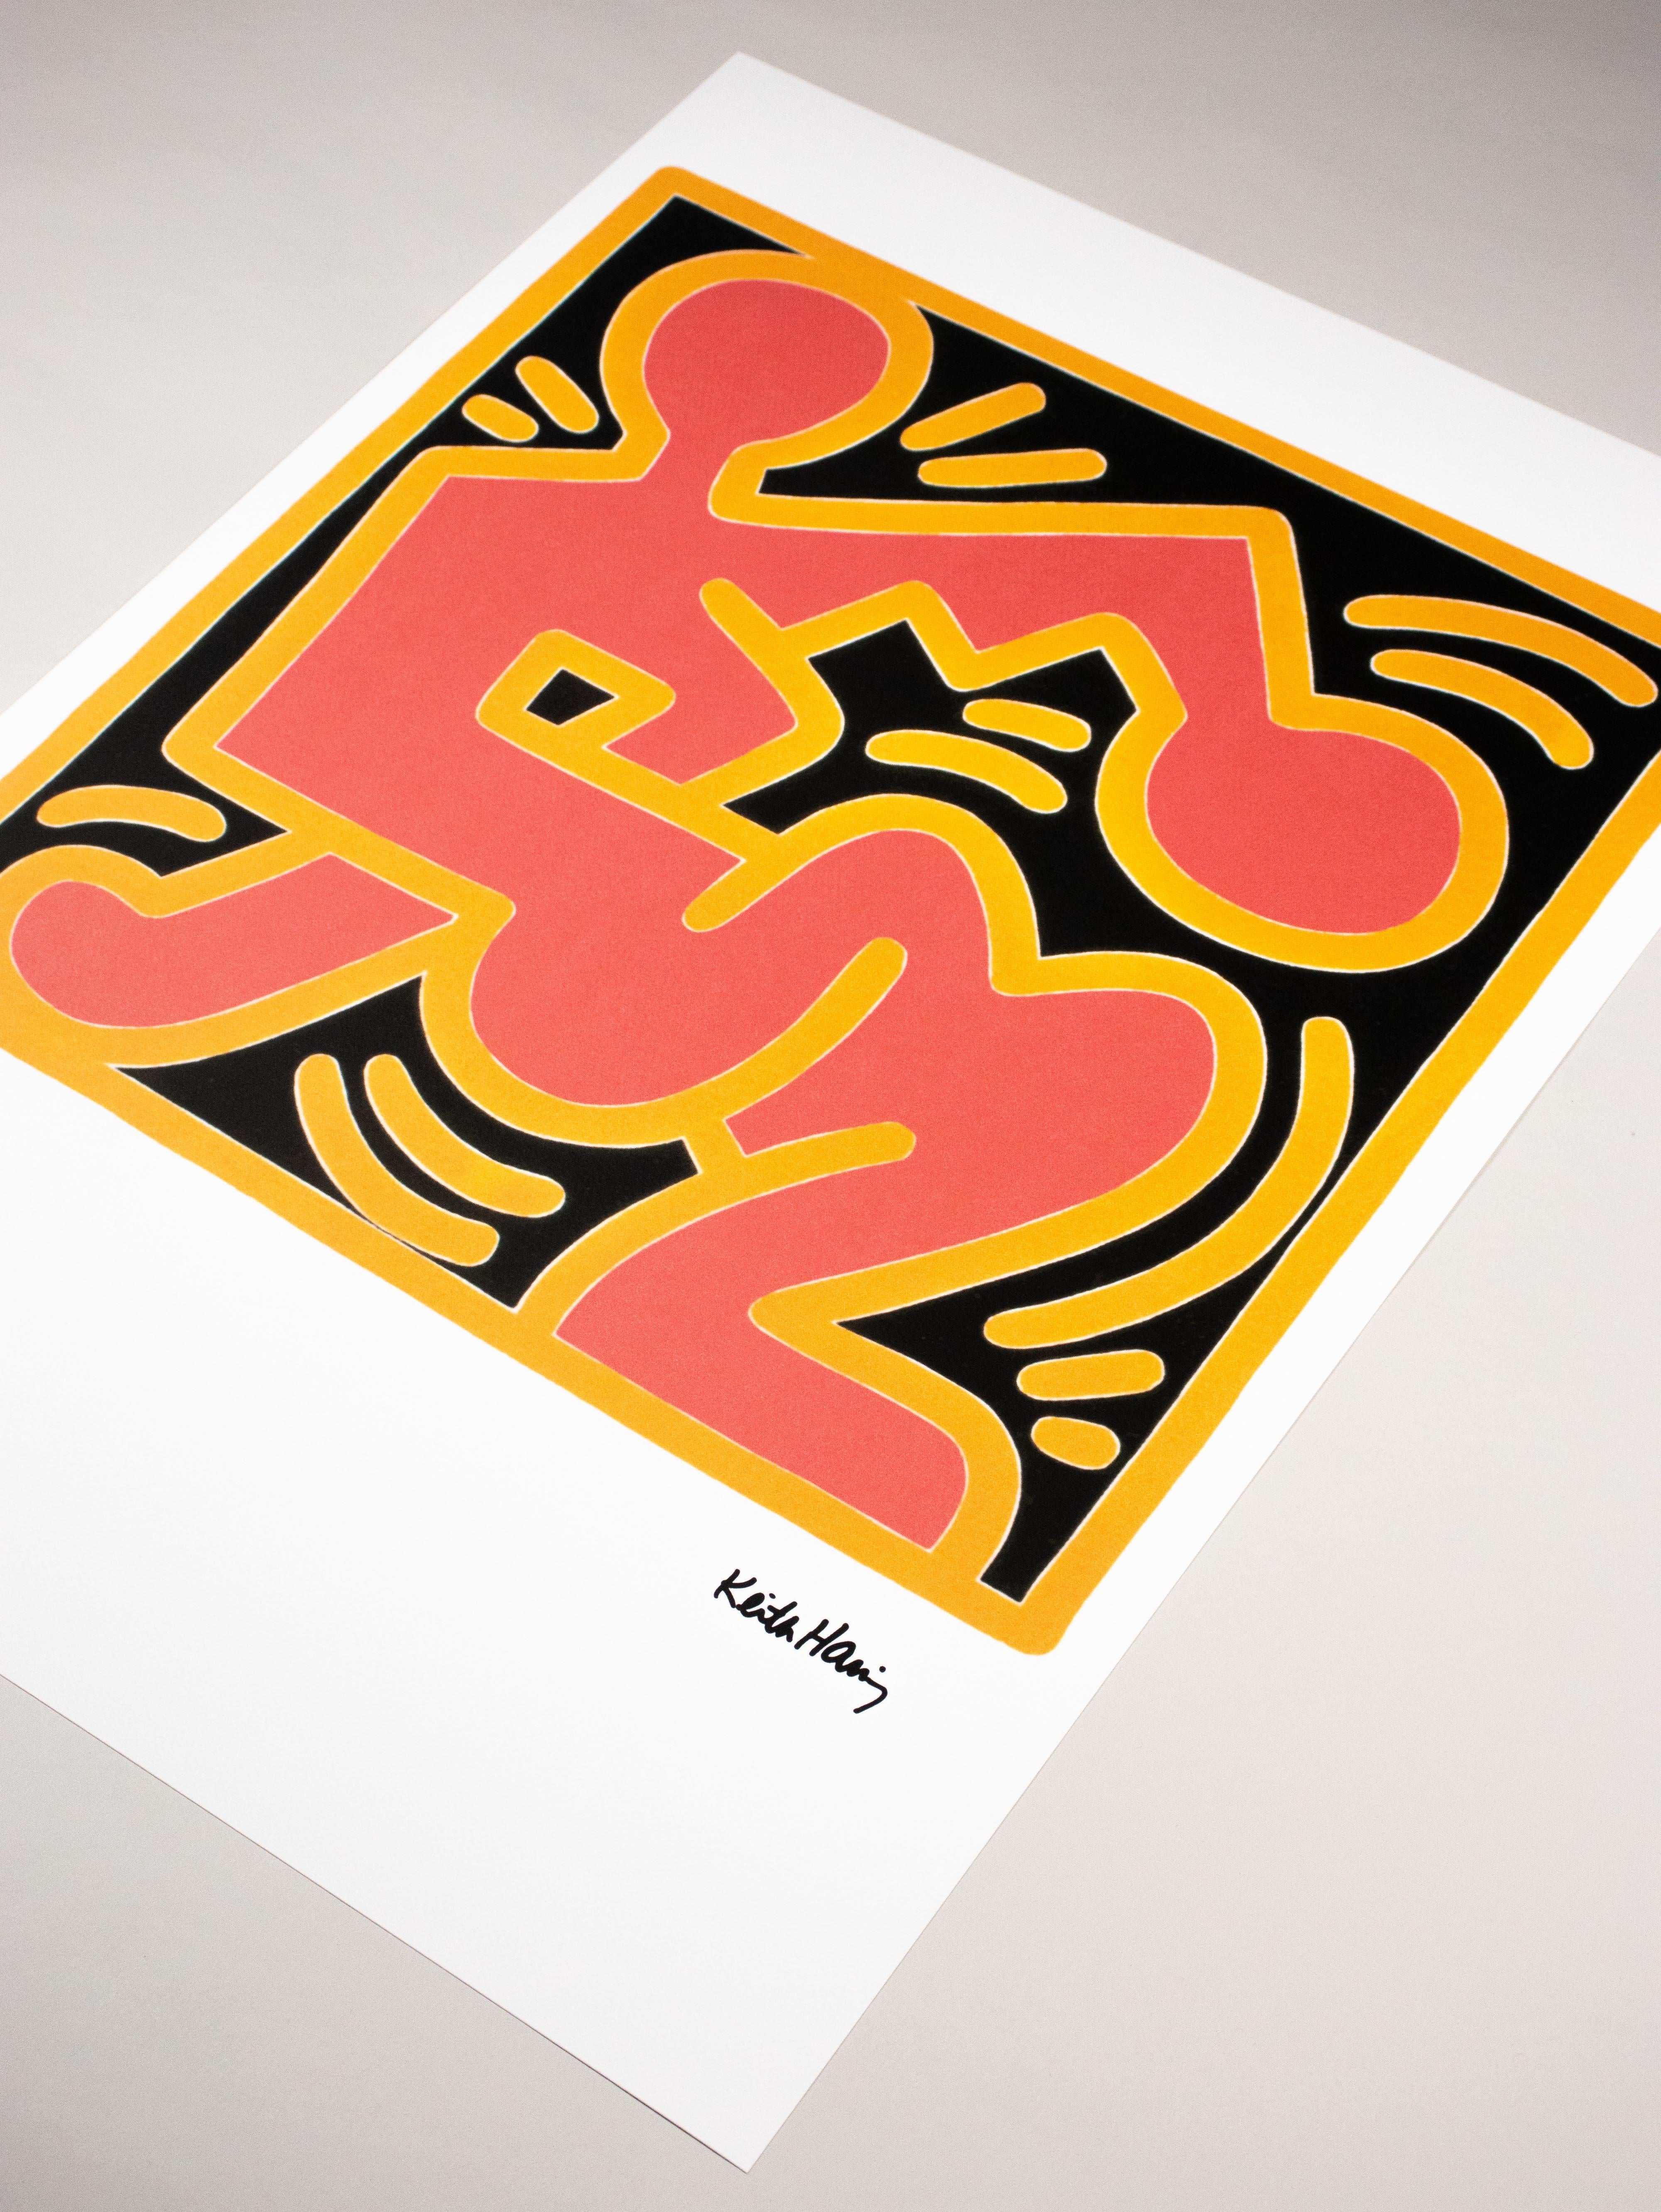 Lithographie – limitierte Auflage 15/150 Exemplare – Keith Haring Foundation Inc. im Angebot 7